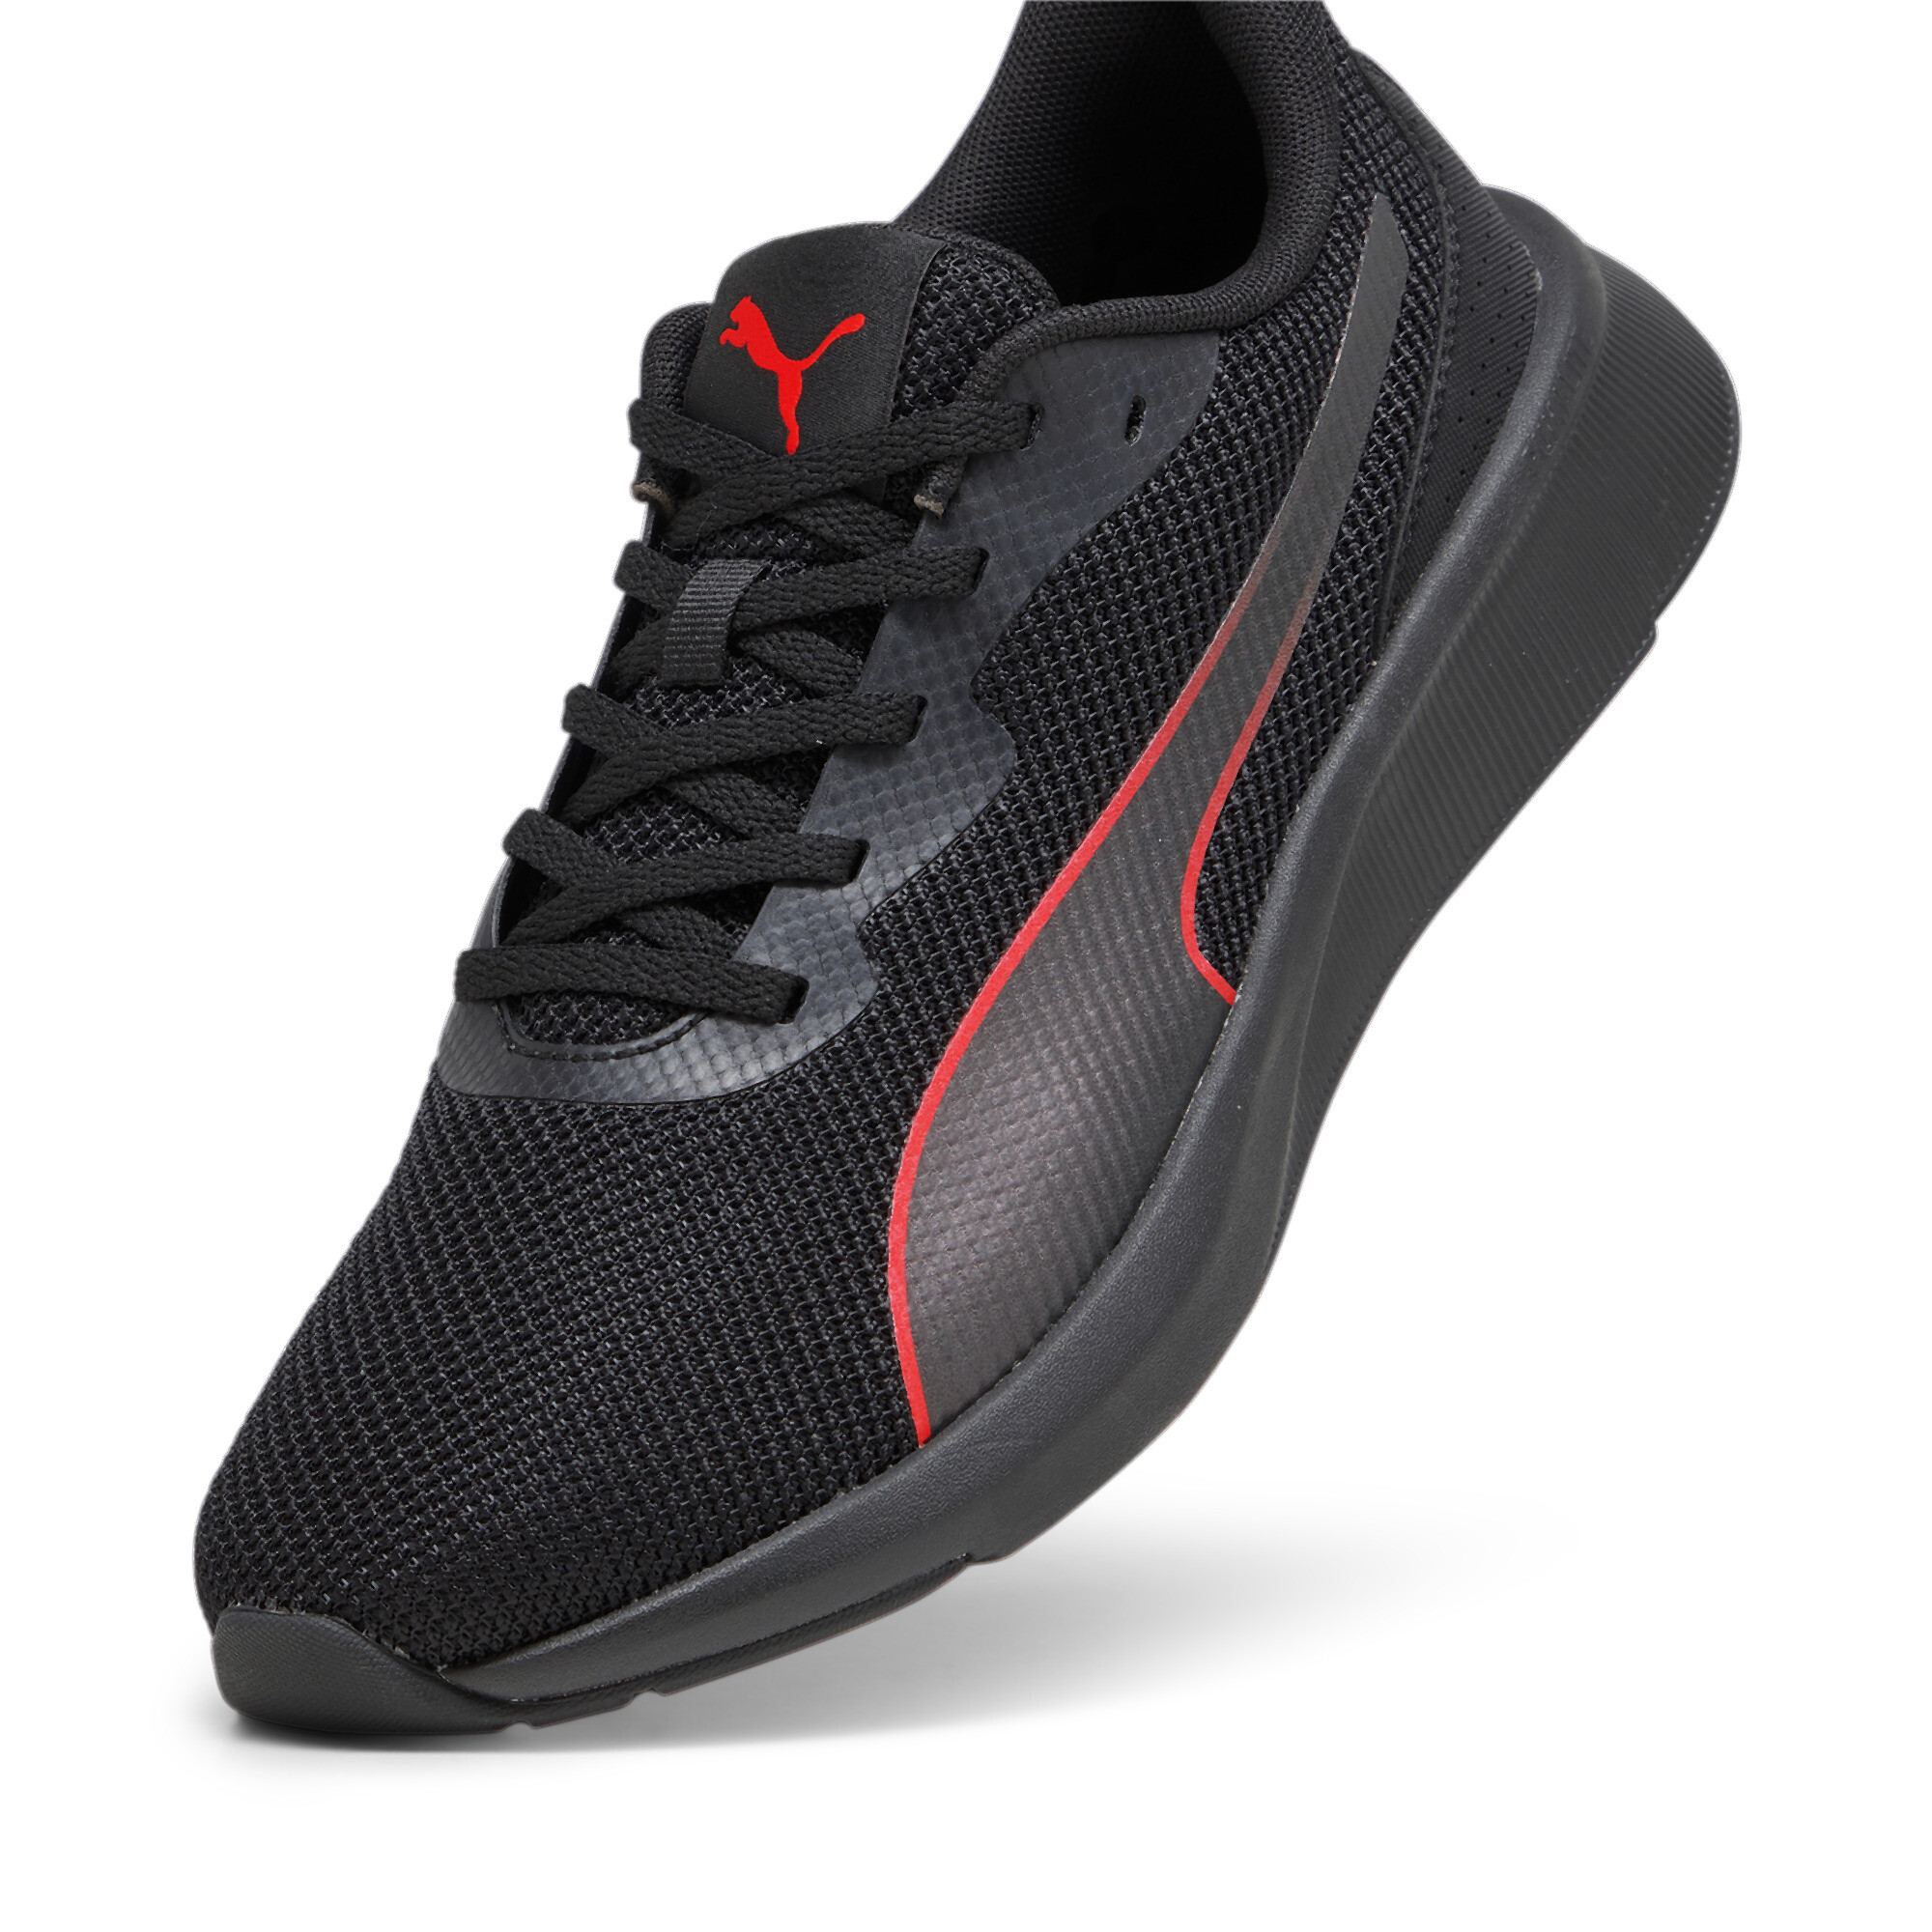 Men's PUMA Flyer Lite Mesh Running Shoes In Black, Size EU 41